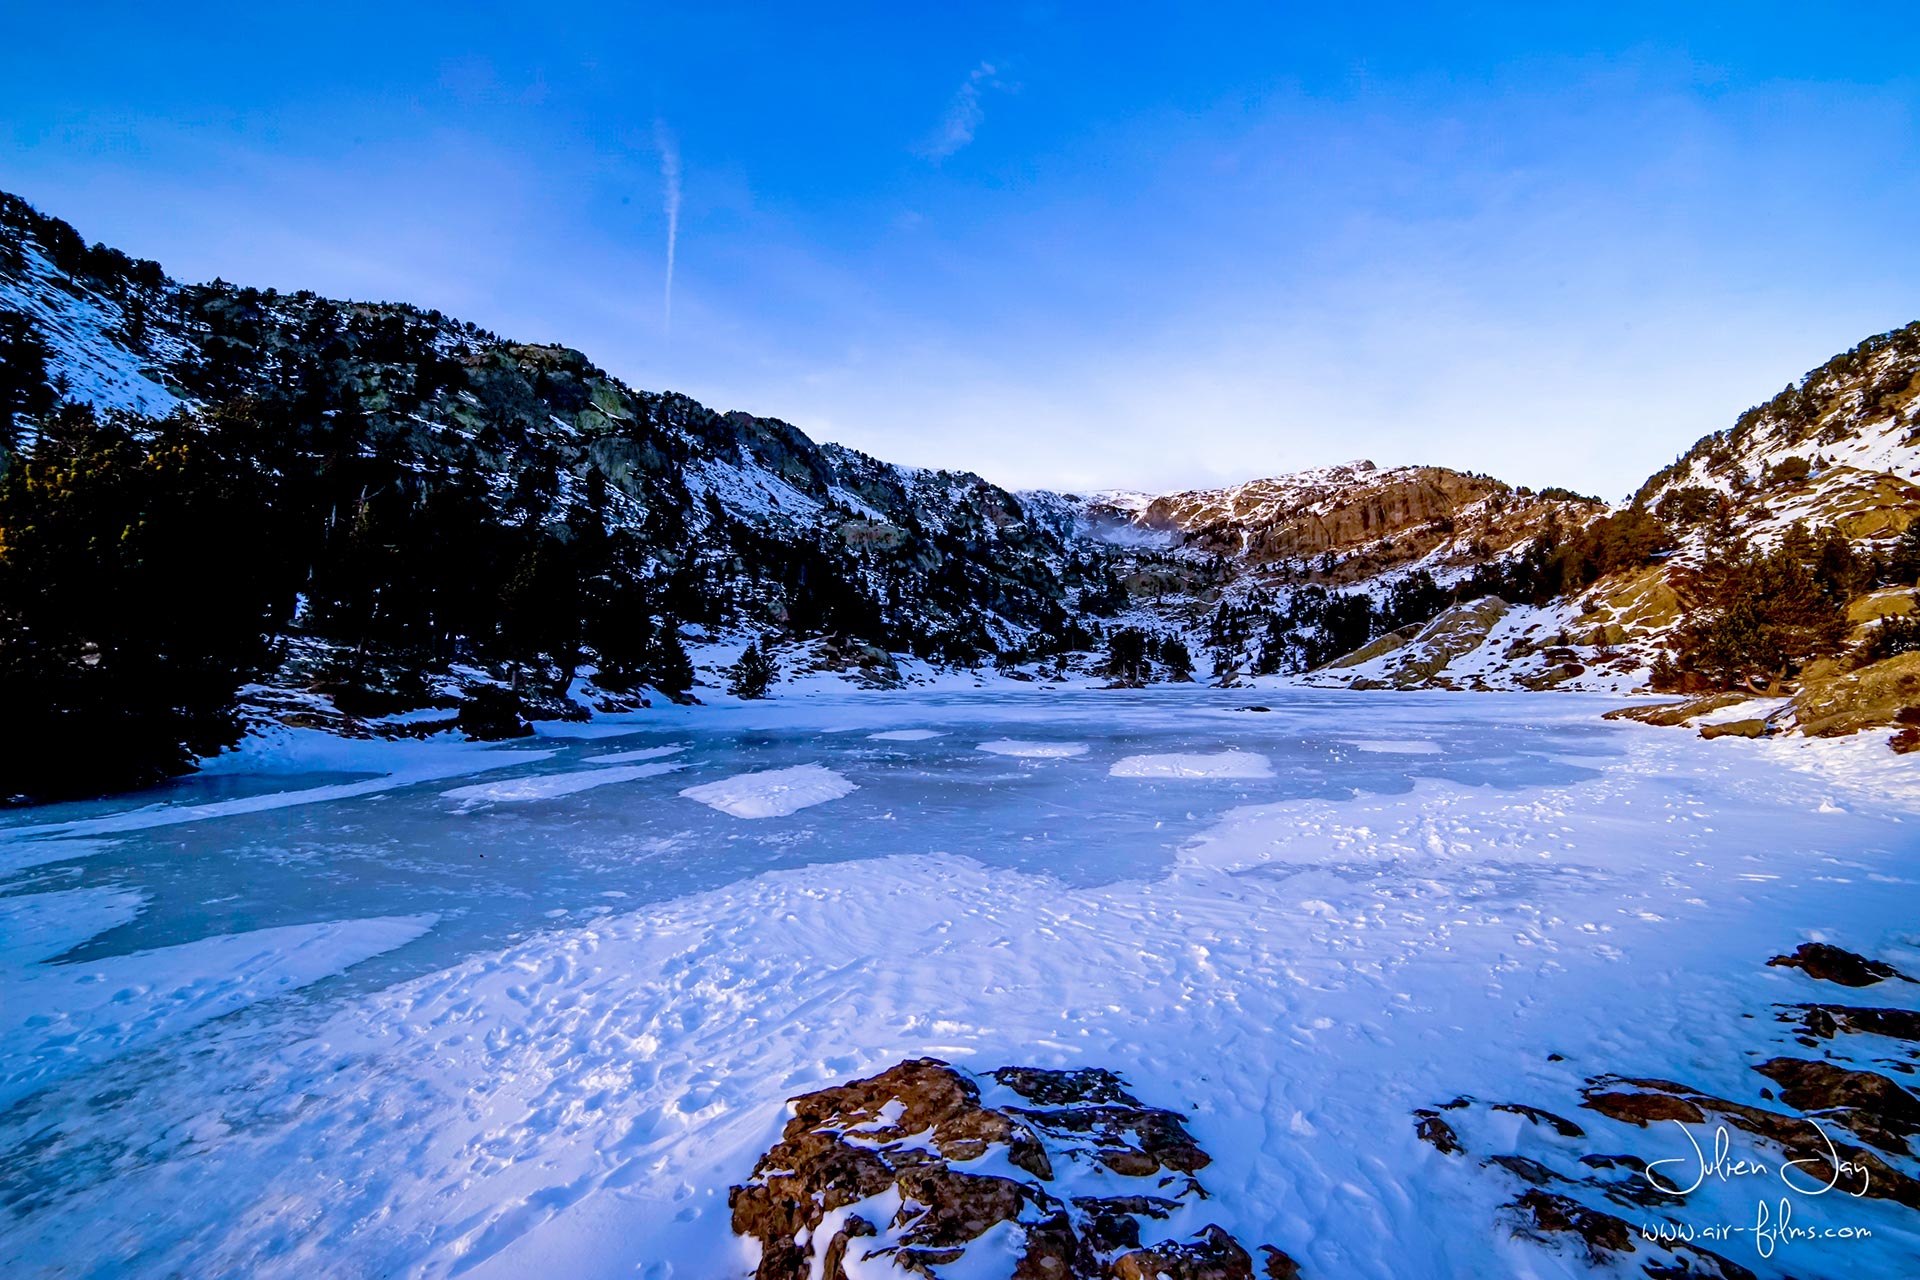 Chamrousse lac achard fin hiver printemps fonte neige station montagne grenoble isère alpes france - © Julien Jay